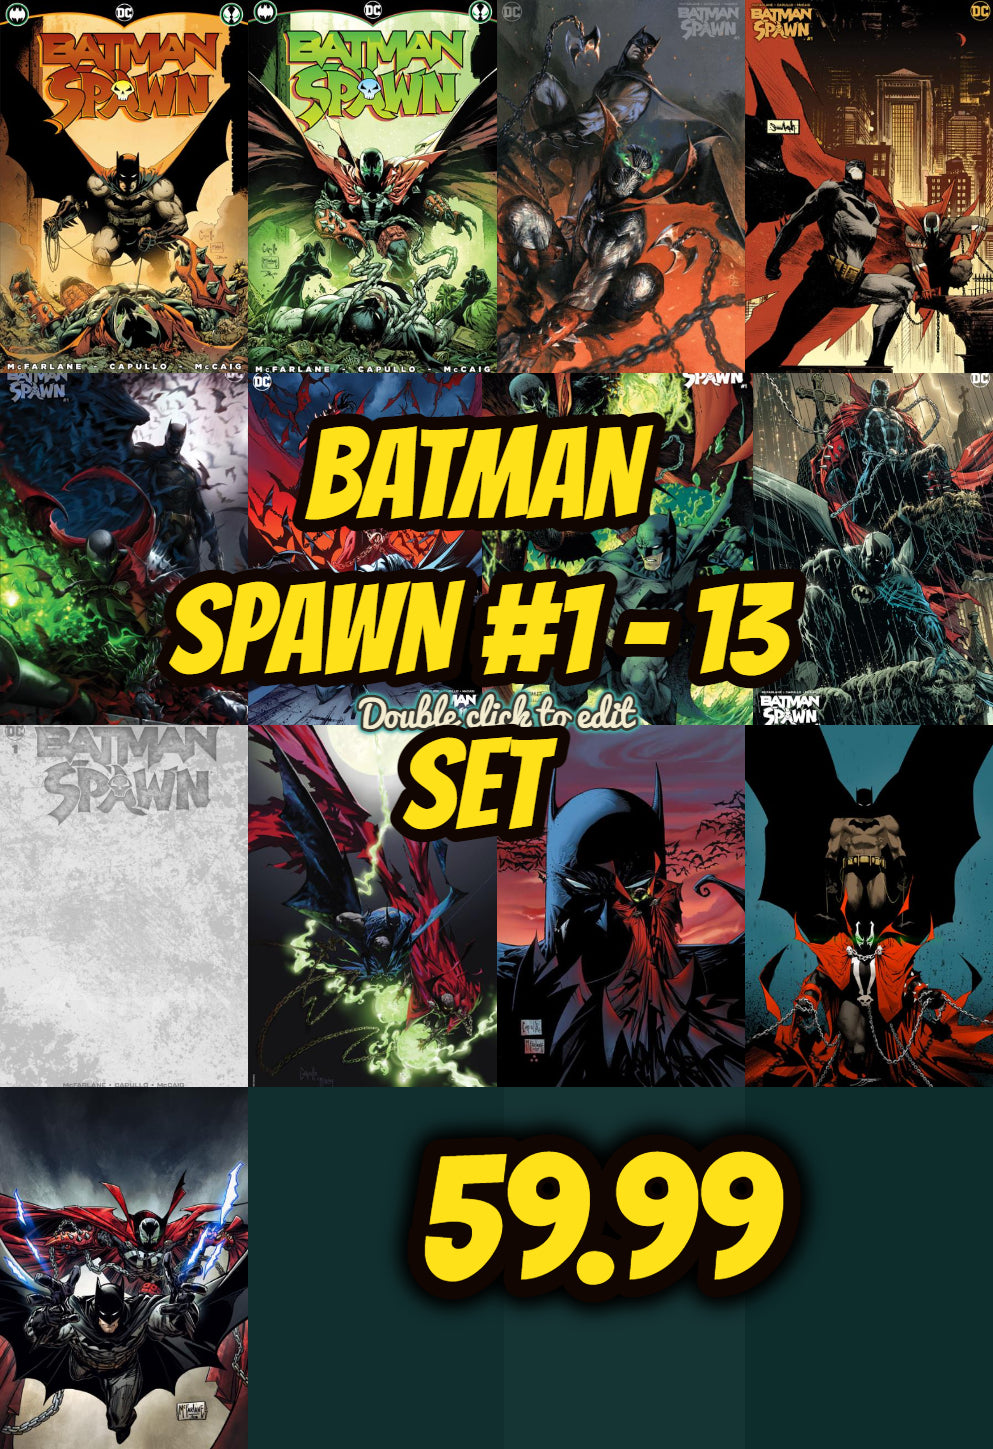 Batman Spawn #1 ALL 13 COVERS SET.